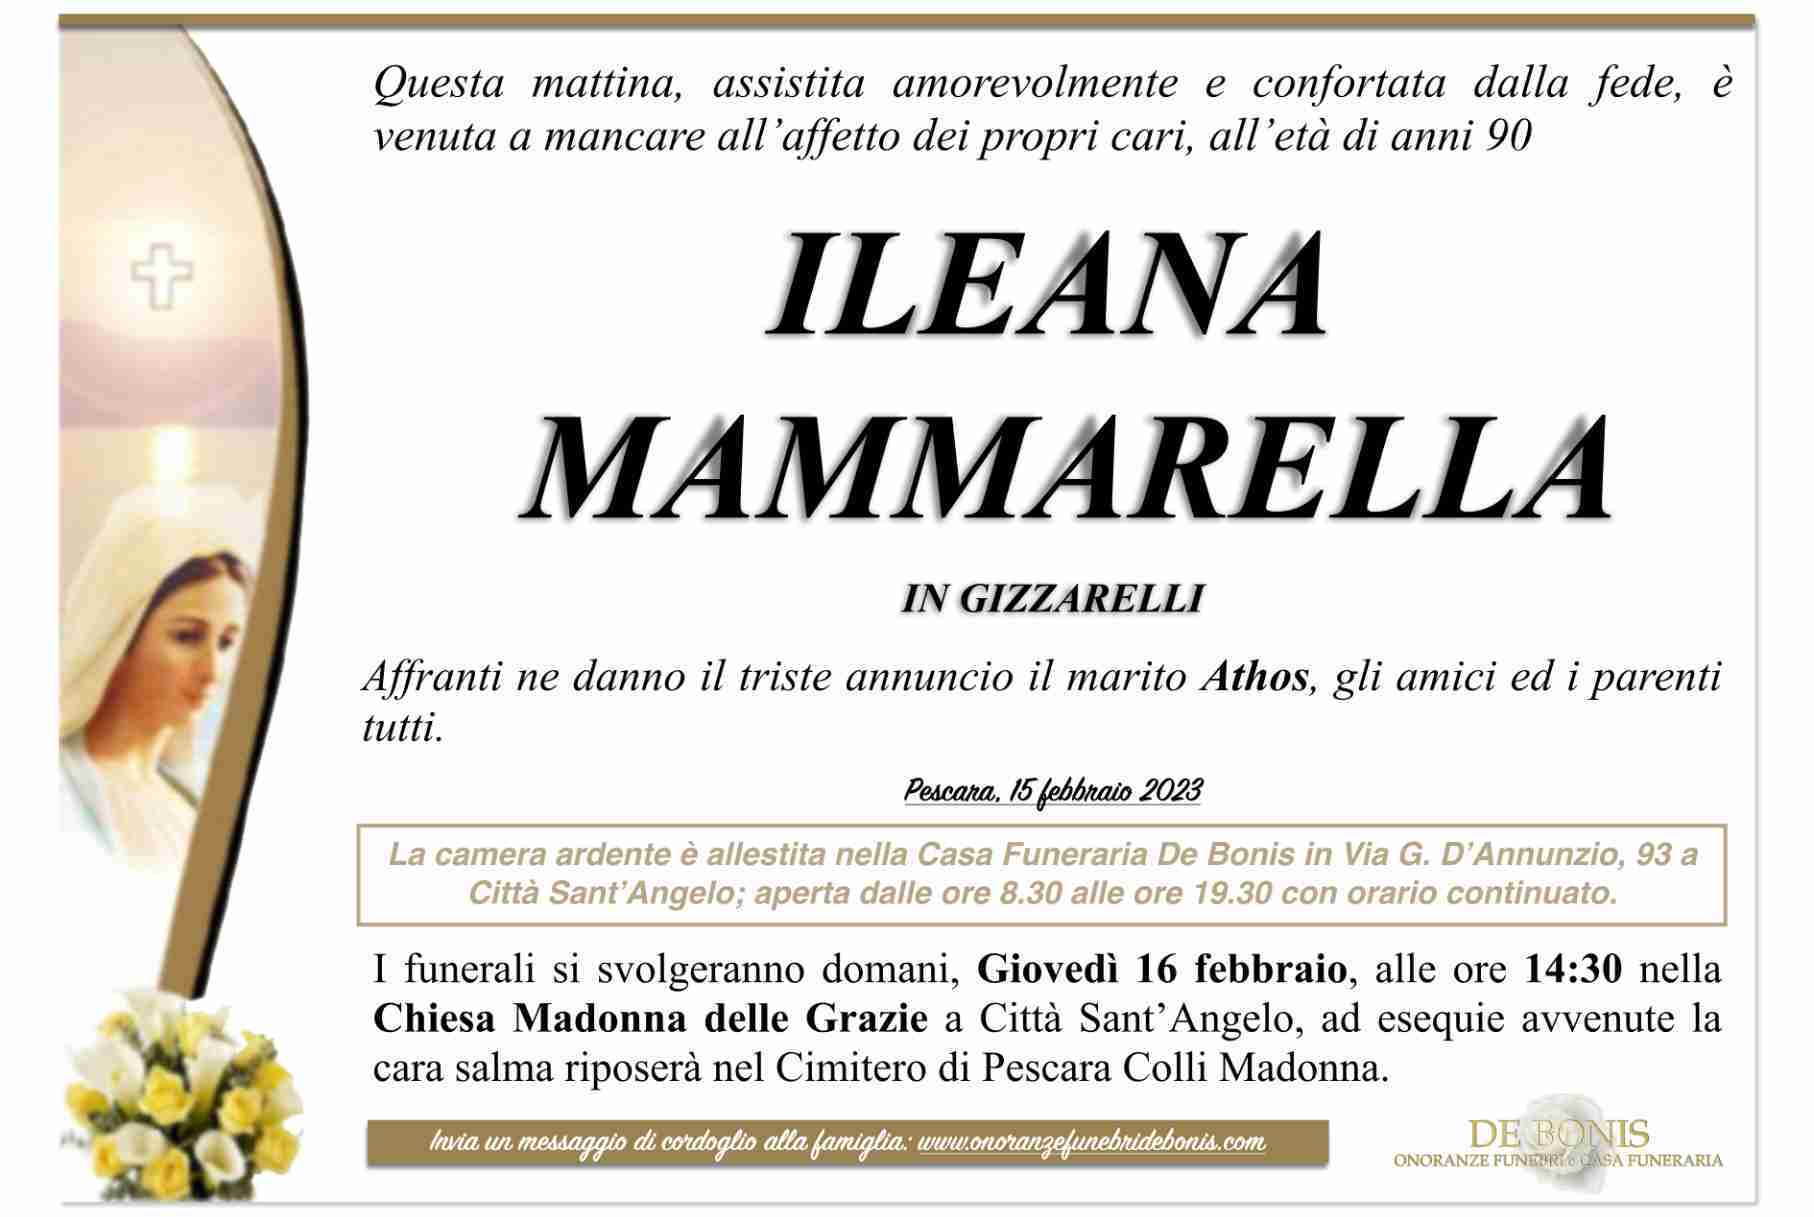 Ileana Mammarella